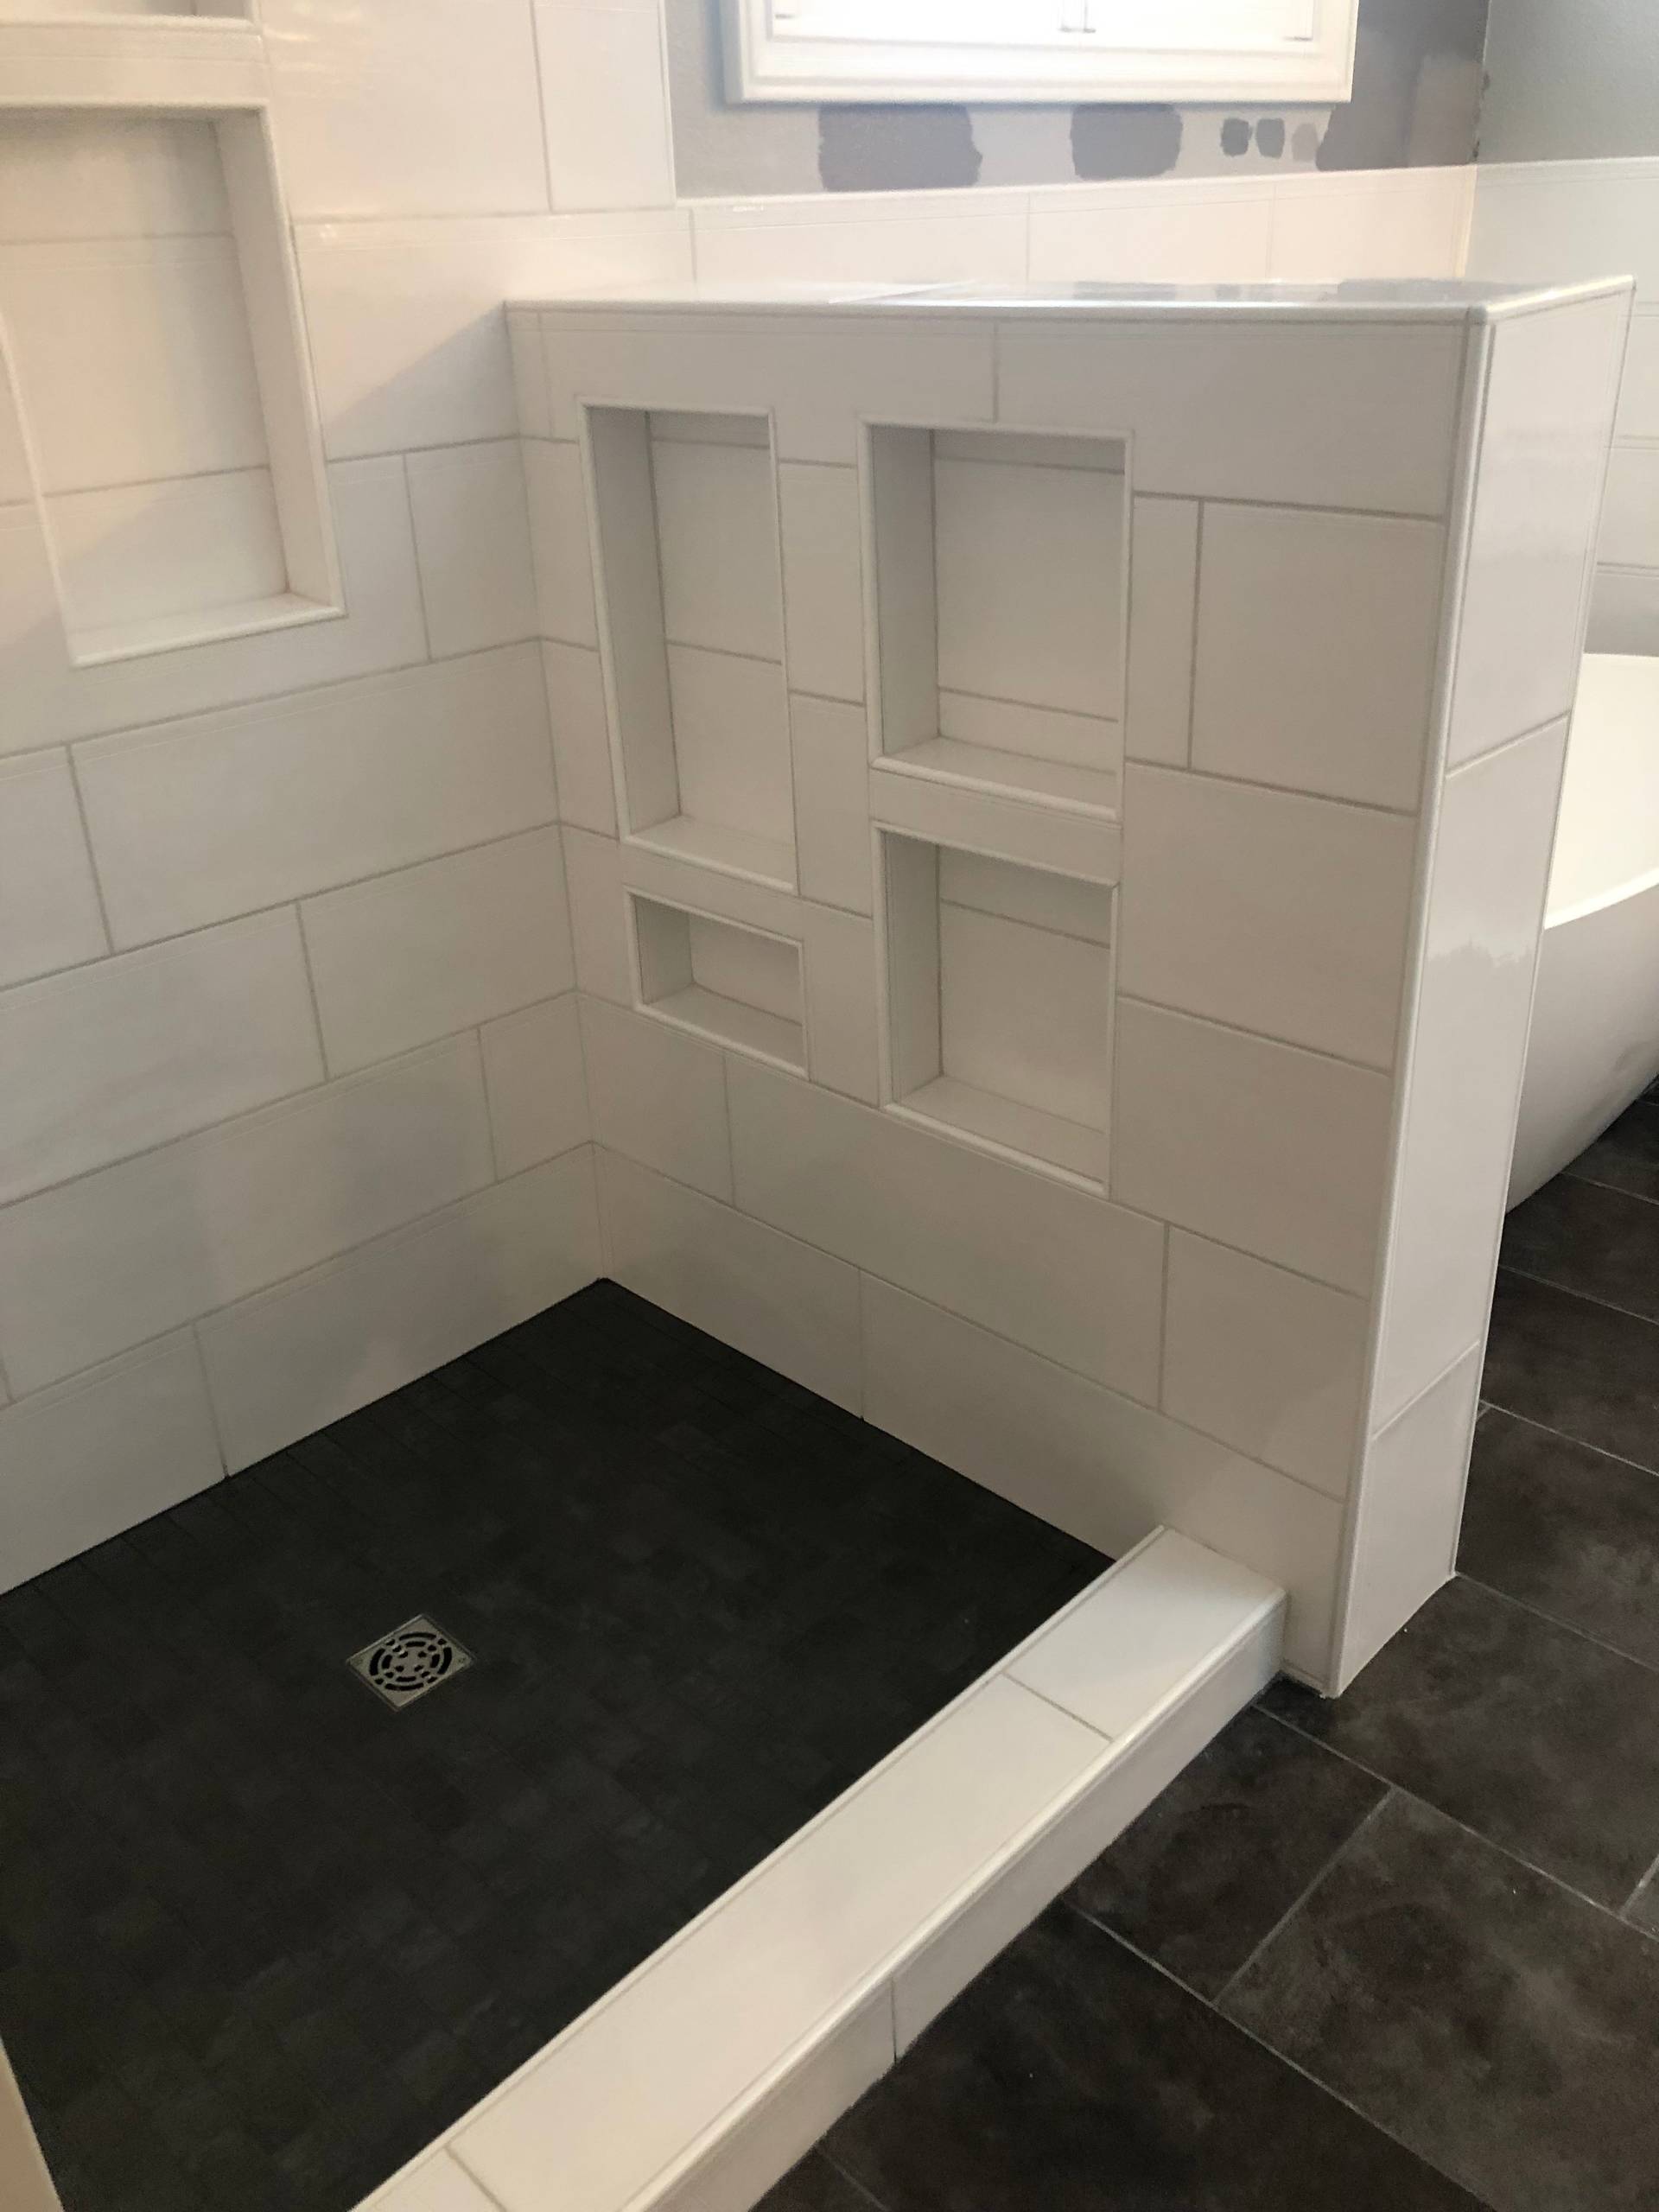 Large-Format Subway Tile, Master Bath